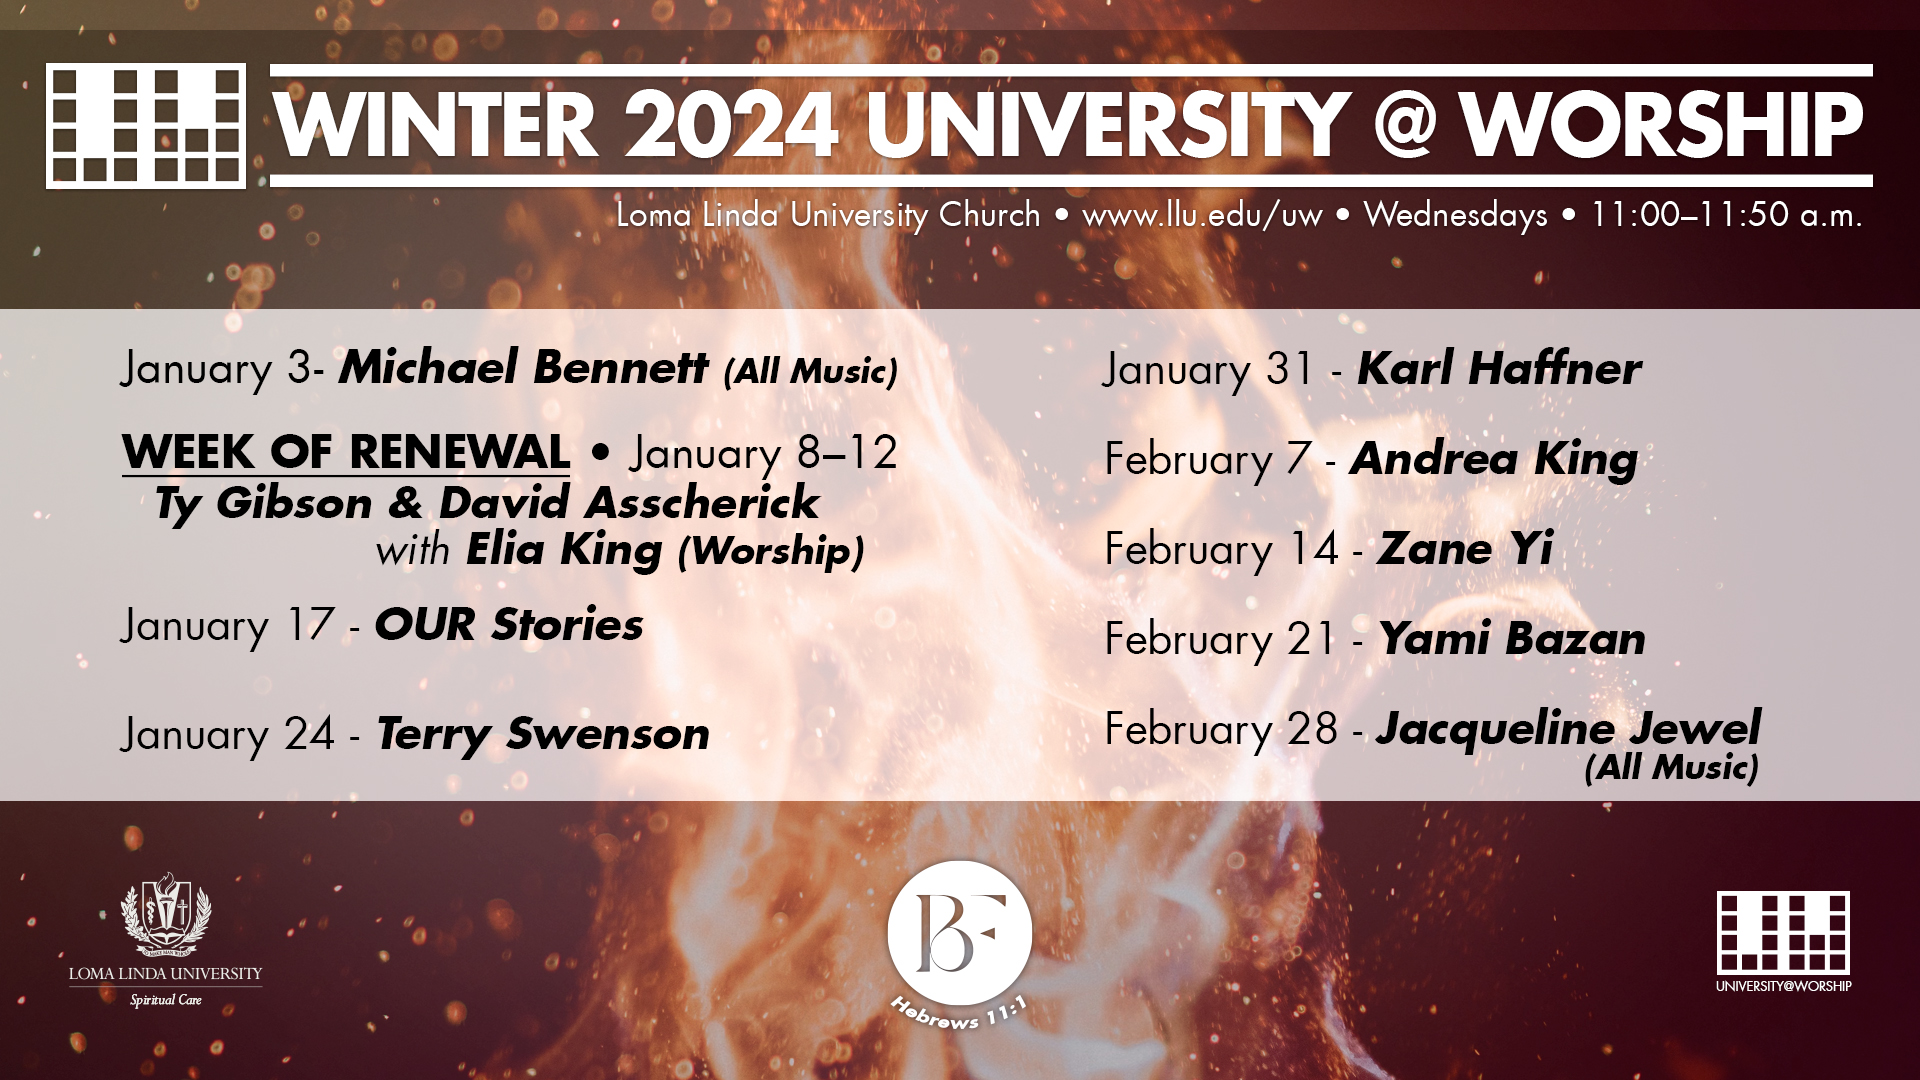 Winter 2024 University at Worship